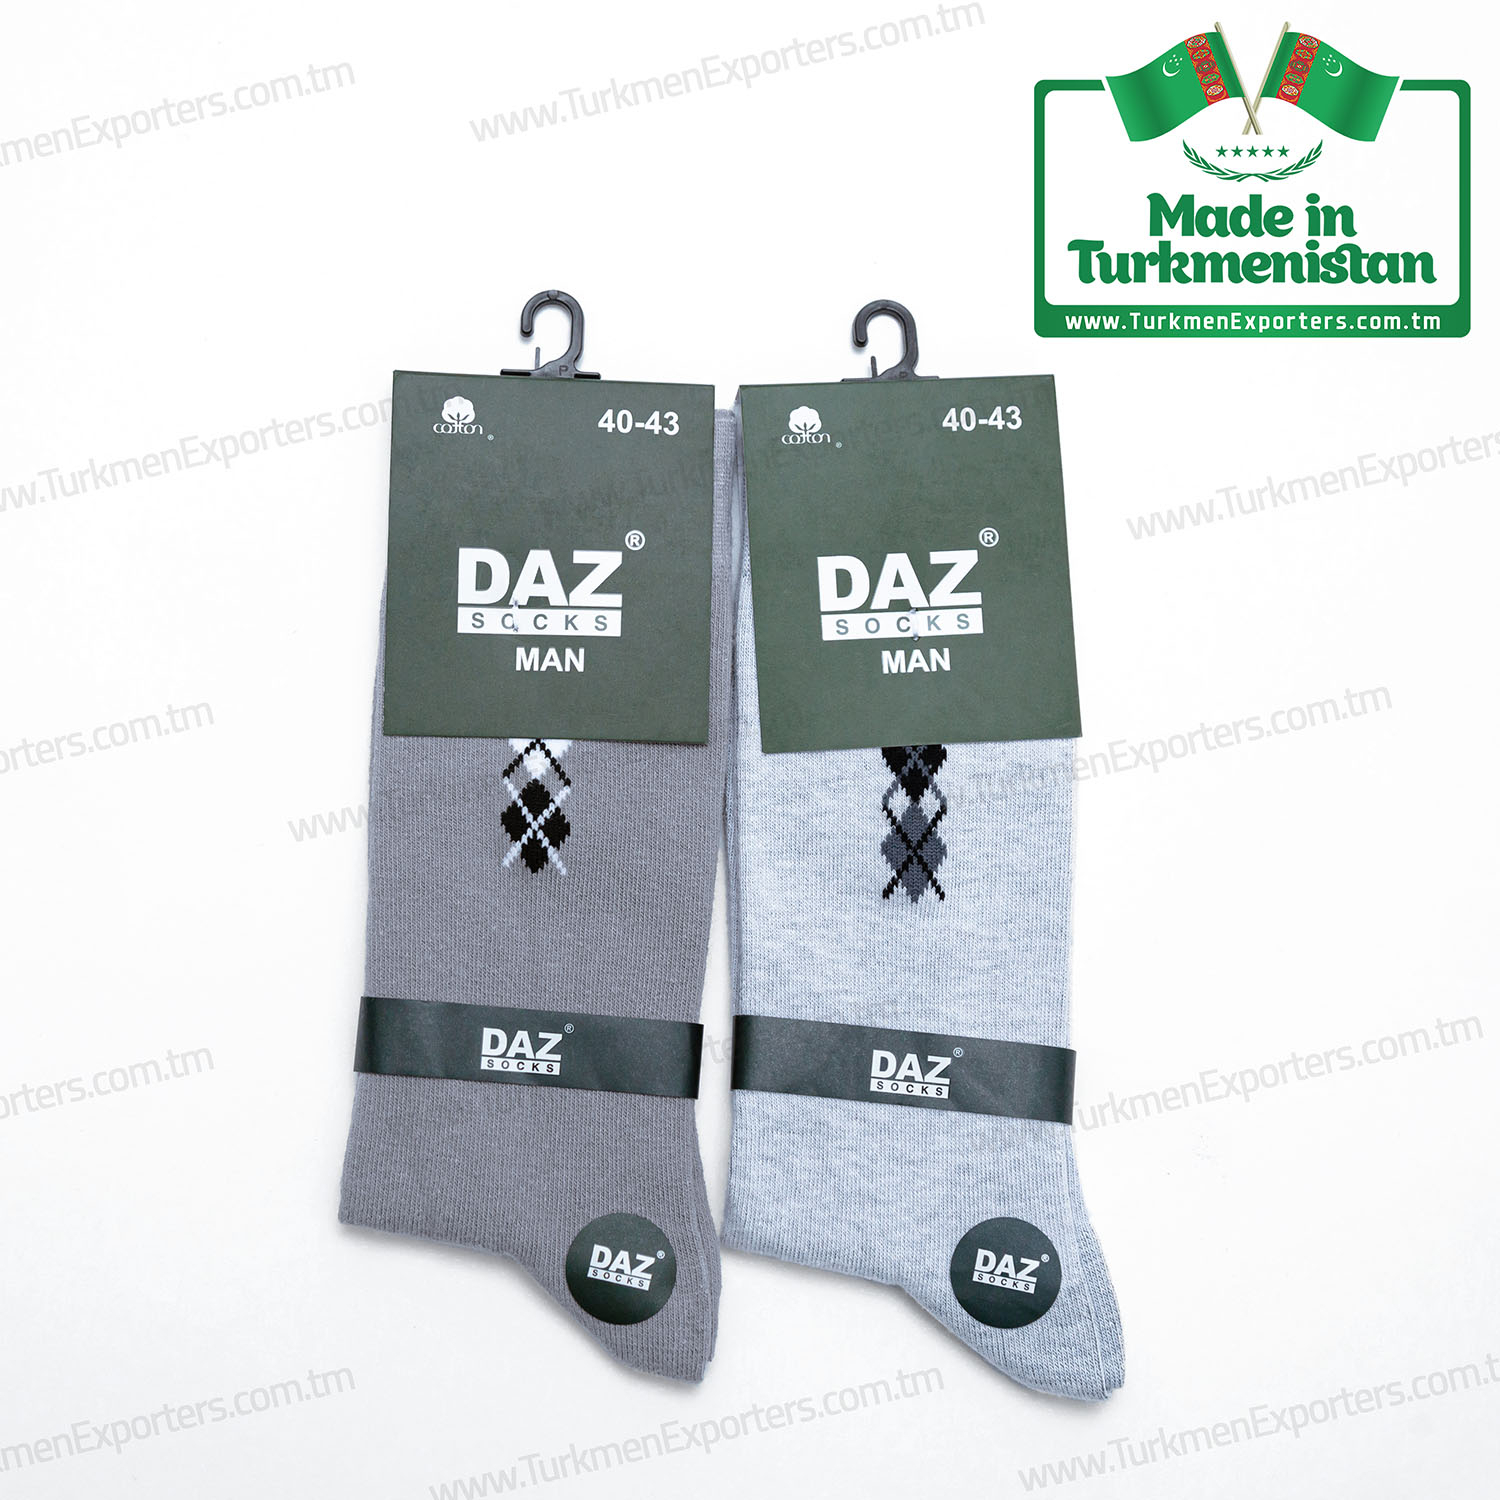 Mens socks wholesale from Turkmenistan | Batly Gadam individual enterprise